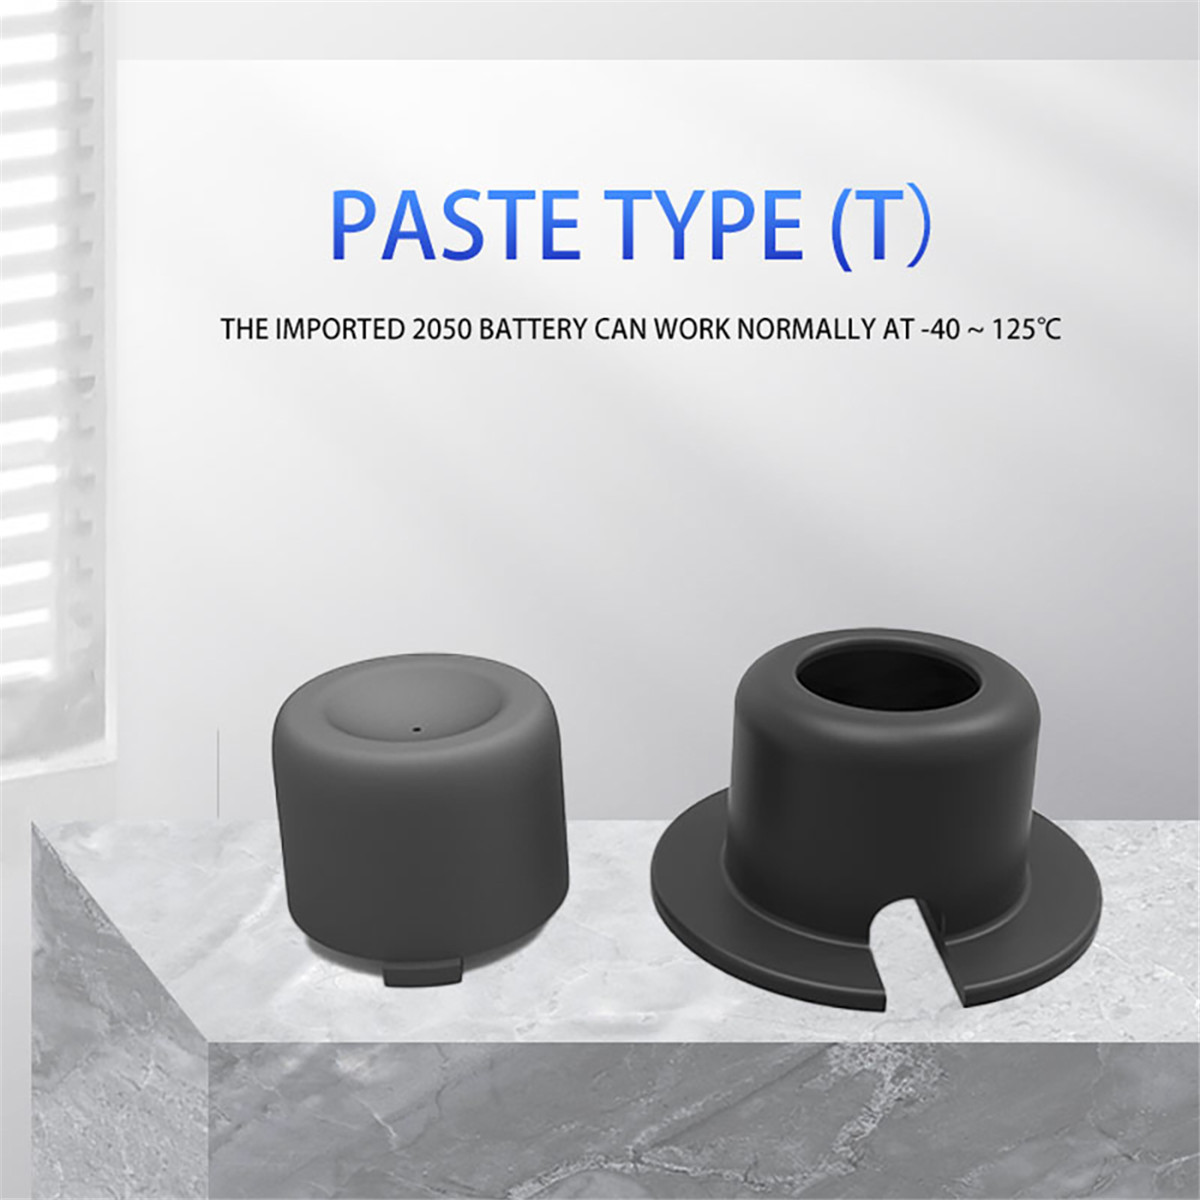 Paste type01 (10)